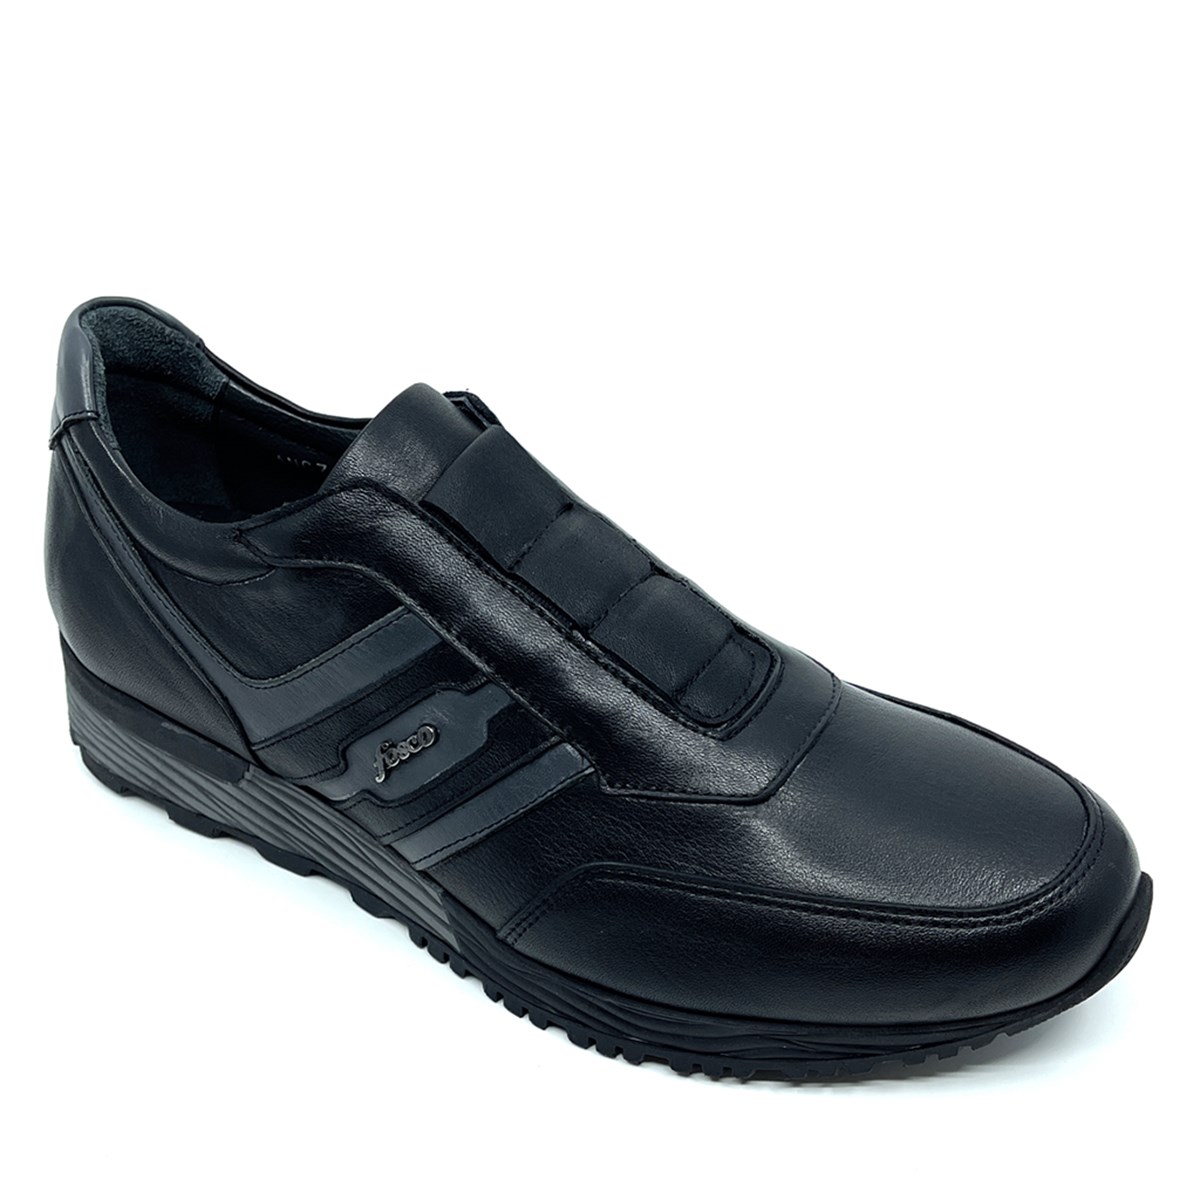 Erkek Hakiki Deri Sneakers Ayakkabı, Renk: Siyah, Beden: 43